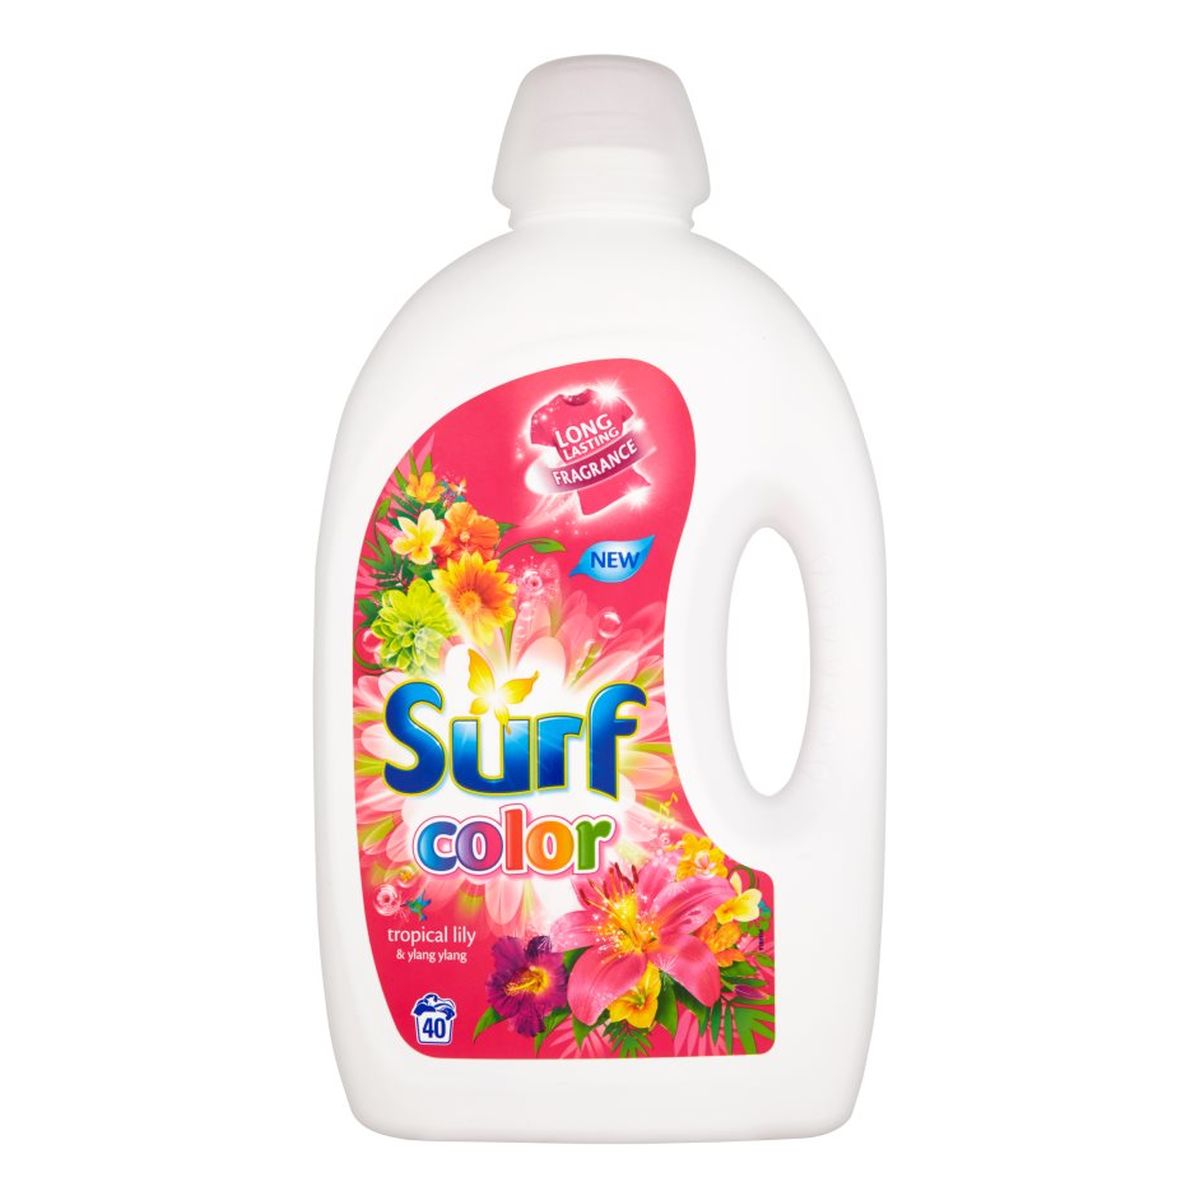 Surf Color Tropical Lily & Ylang Ylang Płyn do prania (40 prań) 2000ml